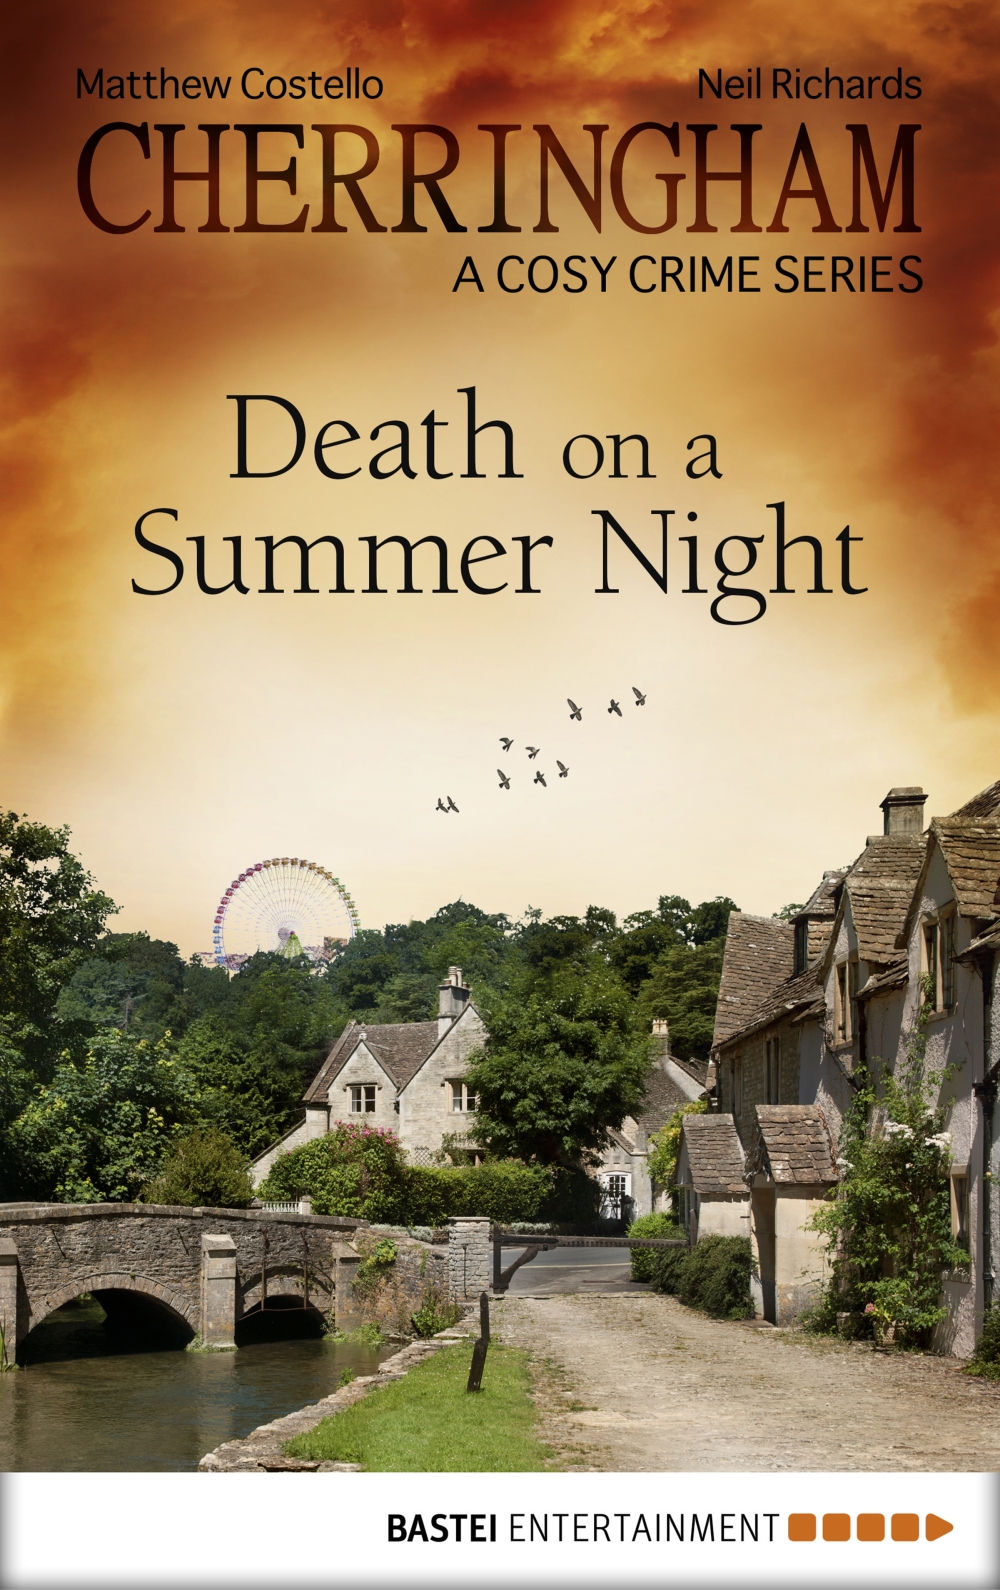 Cherringham--Death on a Summer Night (2015) by Neil Richards